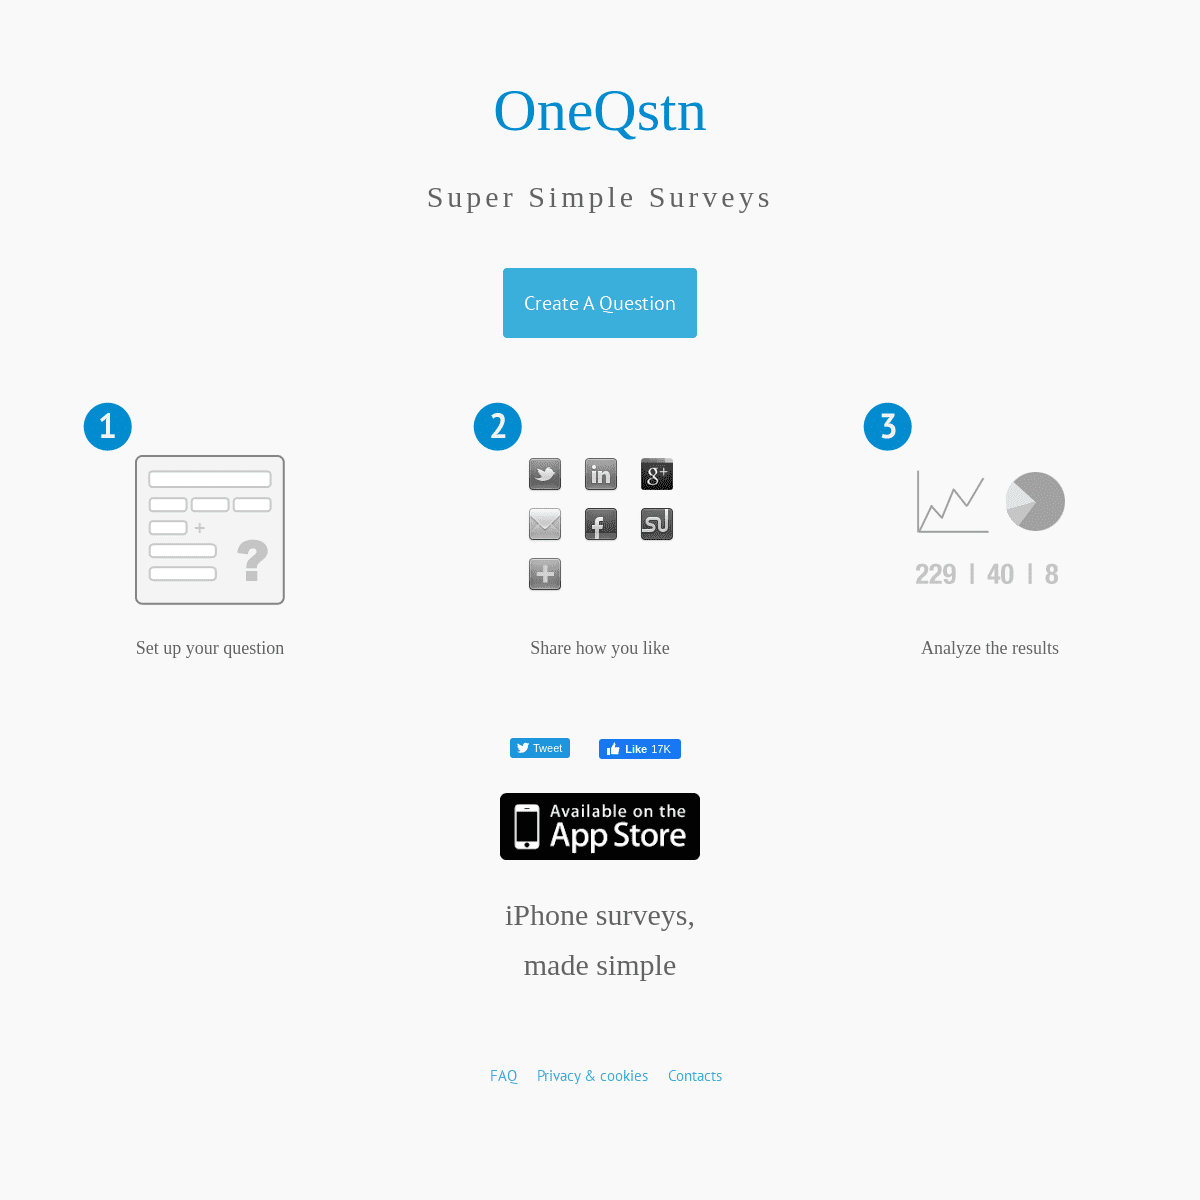 A complete backup of oneqstn.com